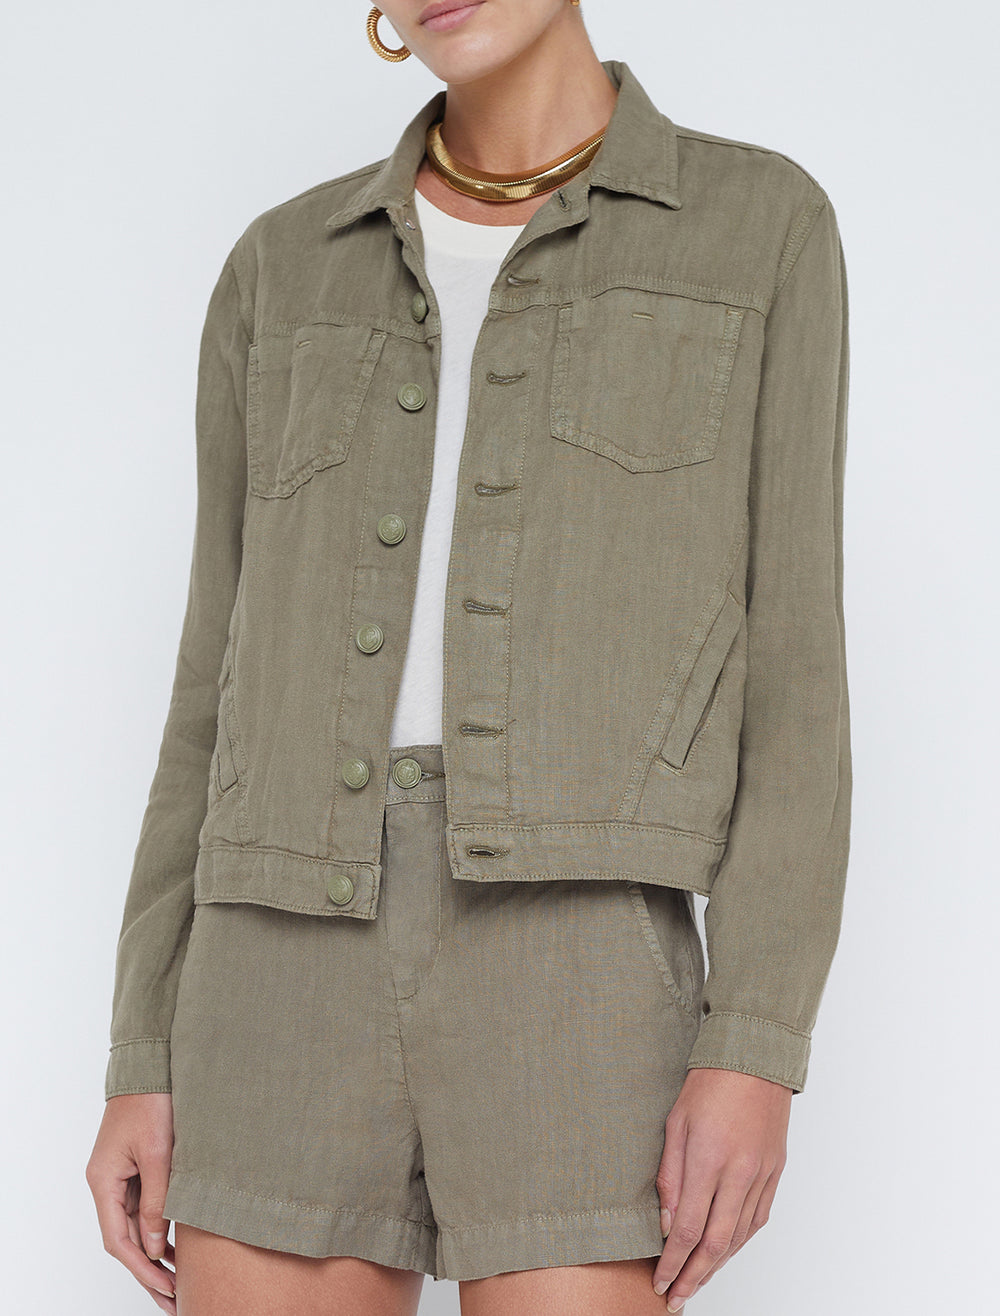 Model wearing L'agence's celine slim femme jacket in covert green.